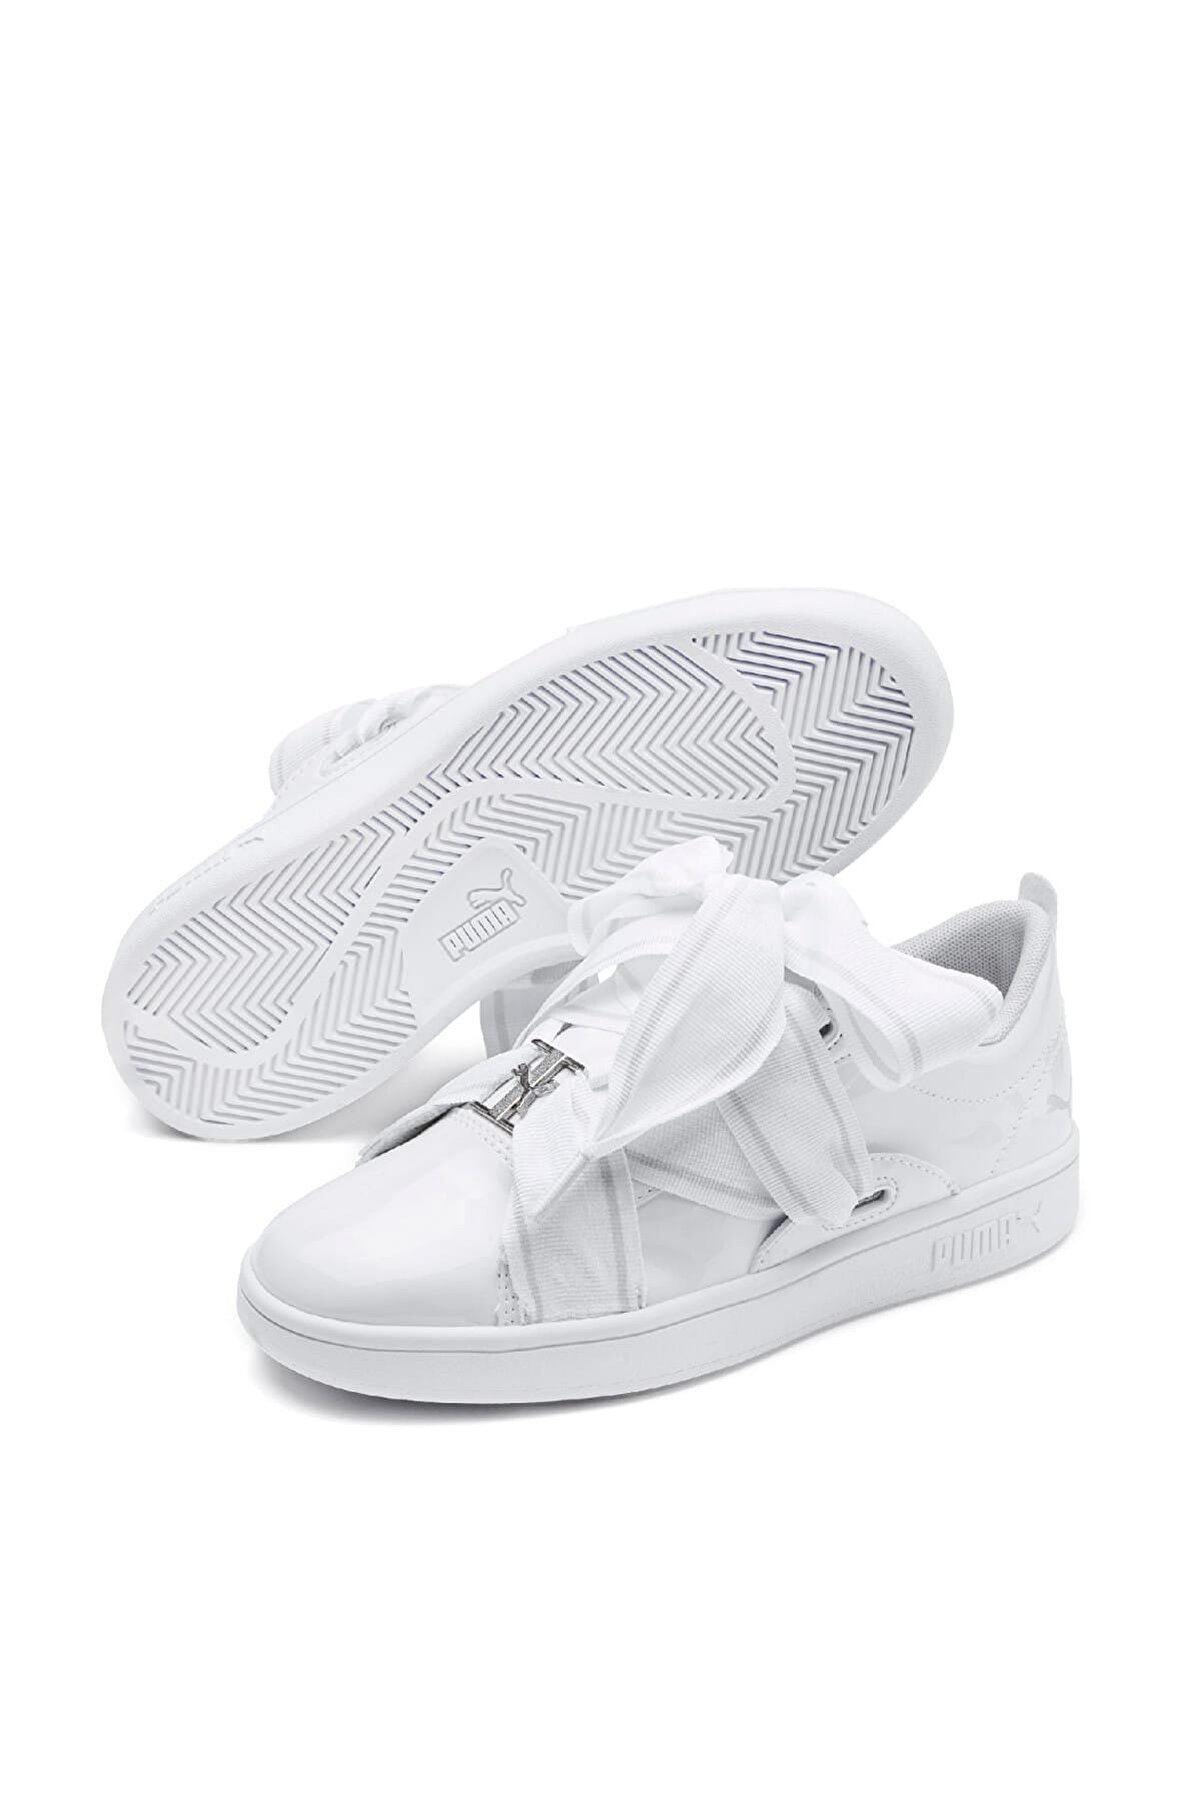 Puma SMASH V2 BKL PATENT Beyaz Kız Çocuk Sneaker Ayakkabı 100415222